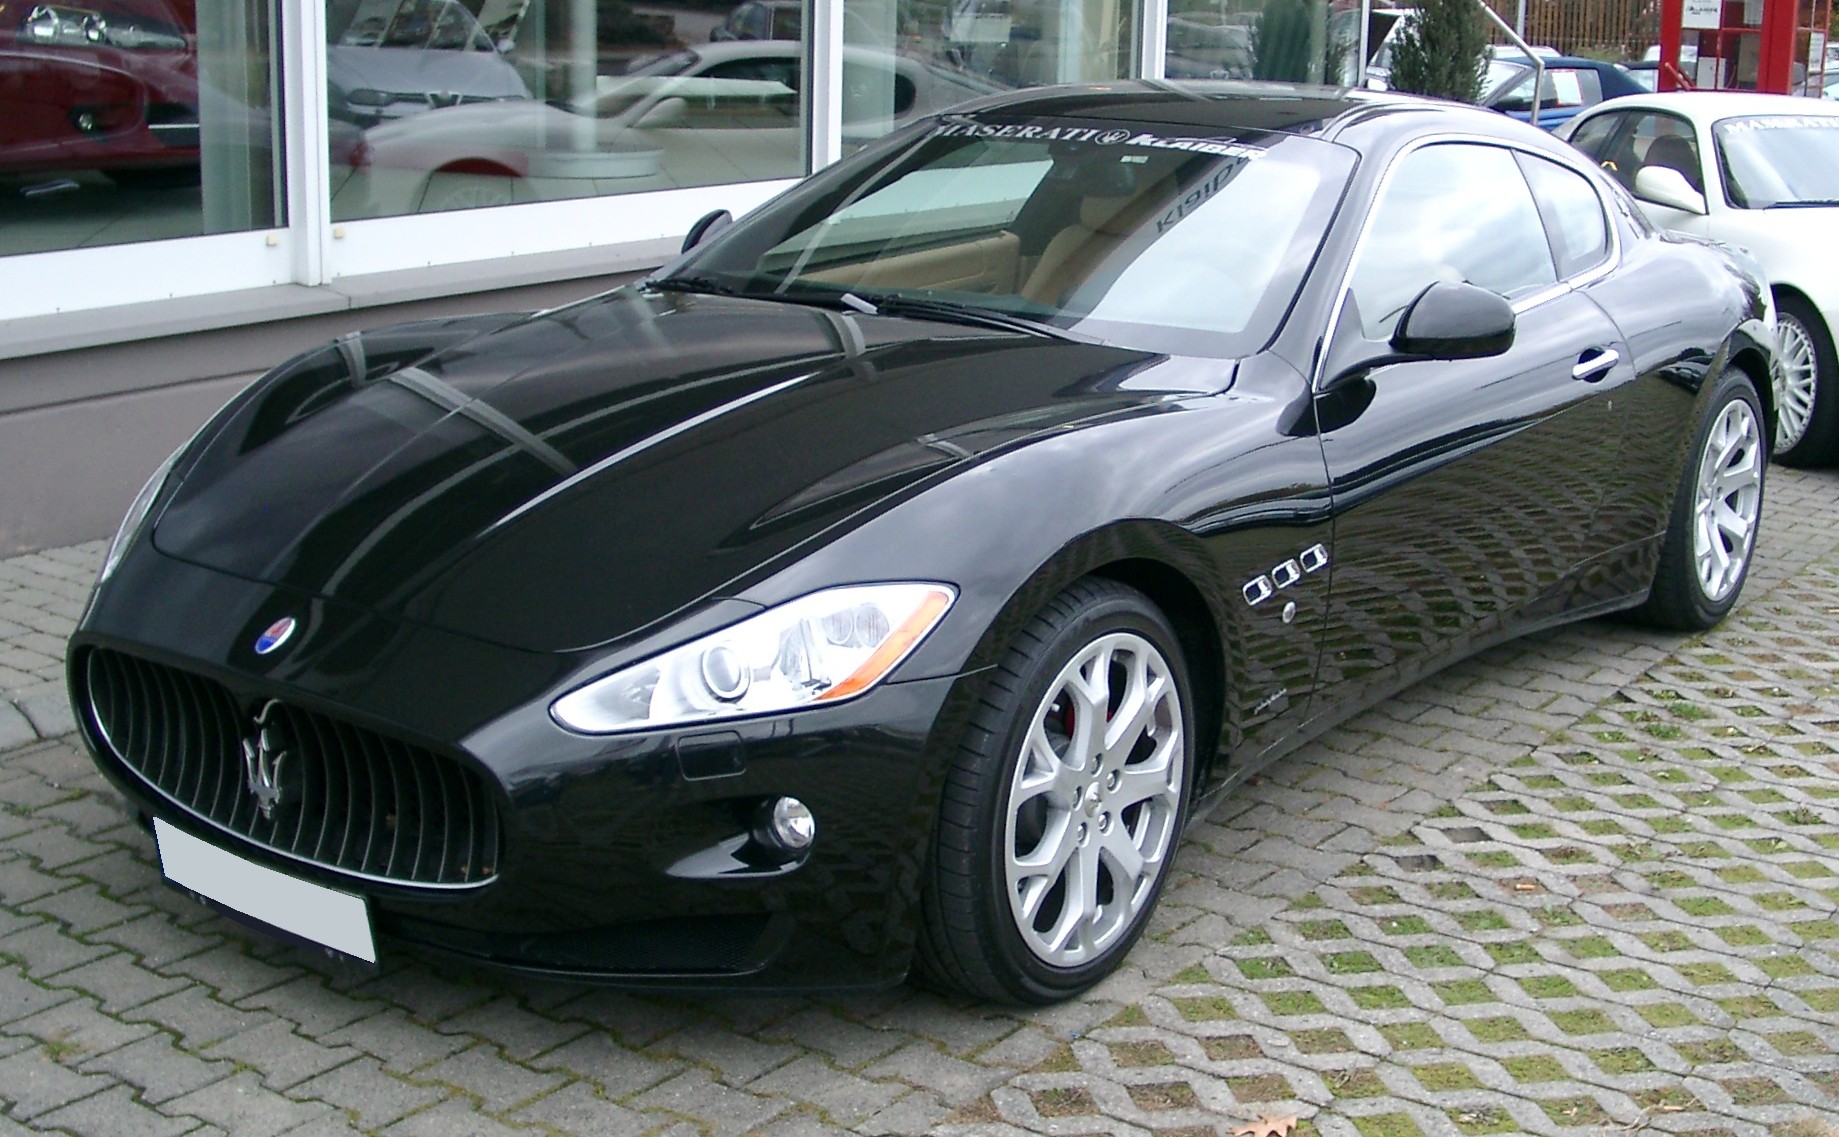 Auto der Marke Maserati - Foto: Wiki Commons